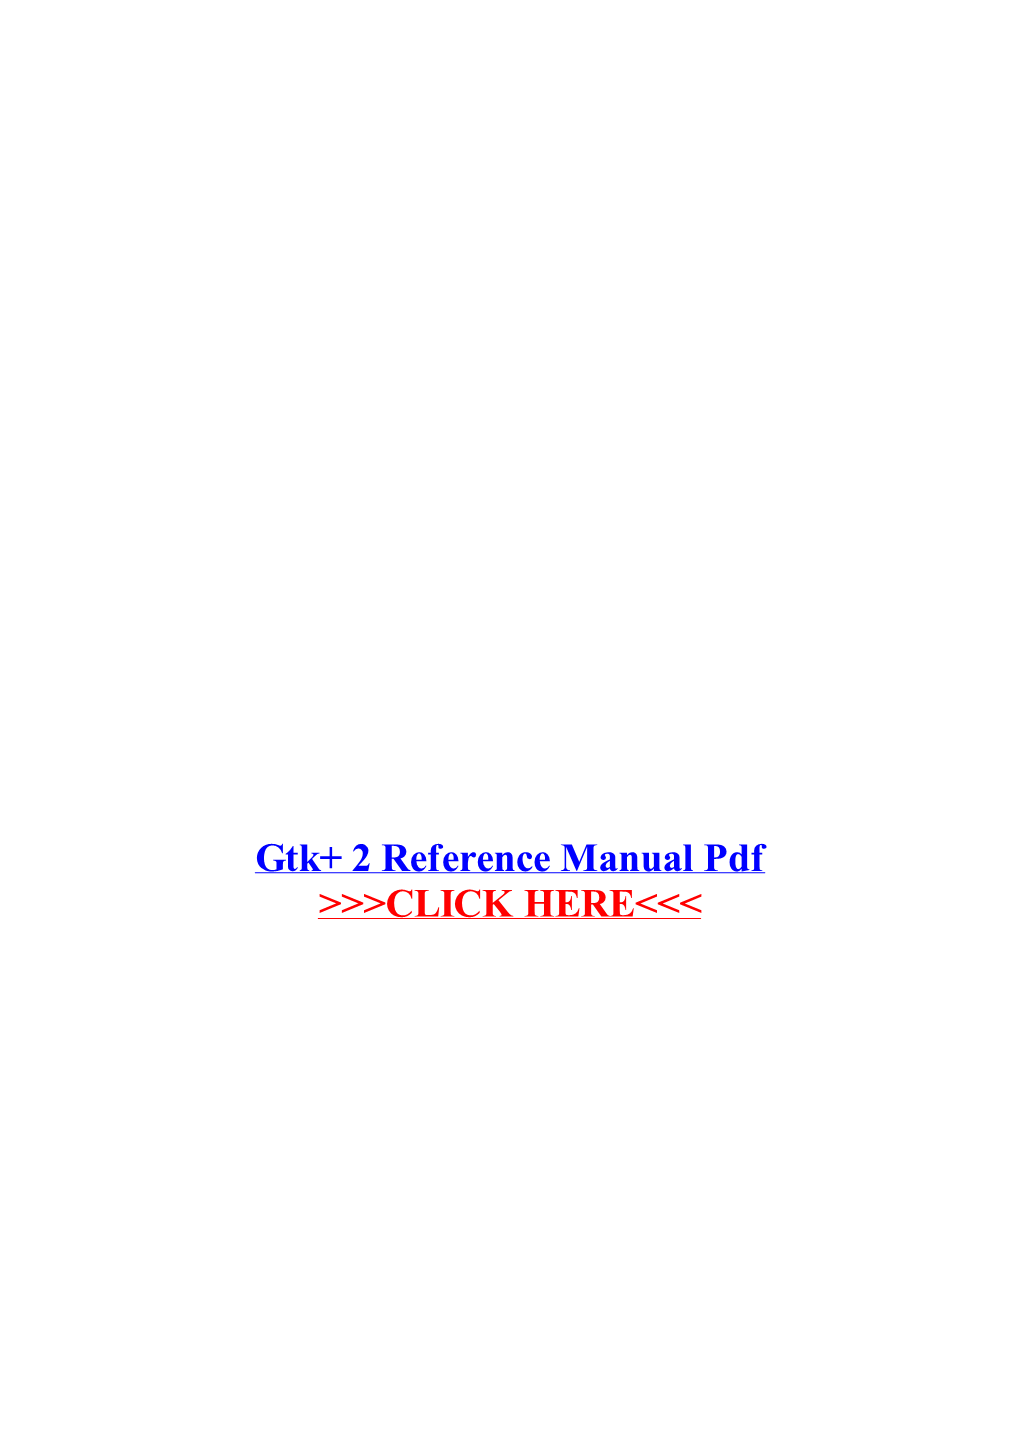 Gtk+ 2 Reference Manual Pdf.Pdf